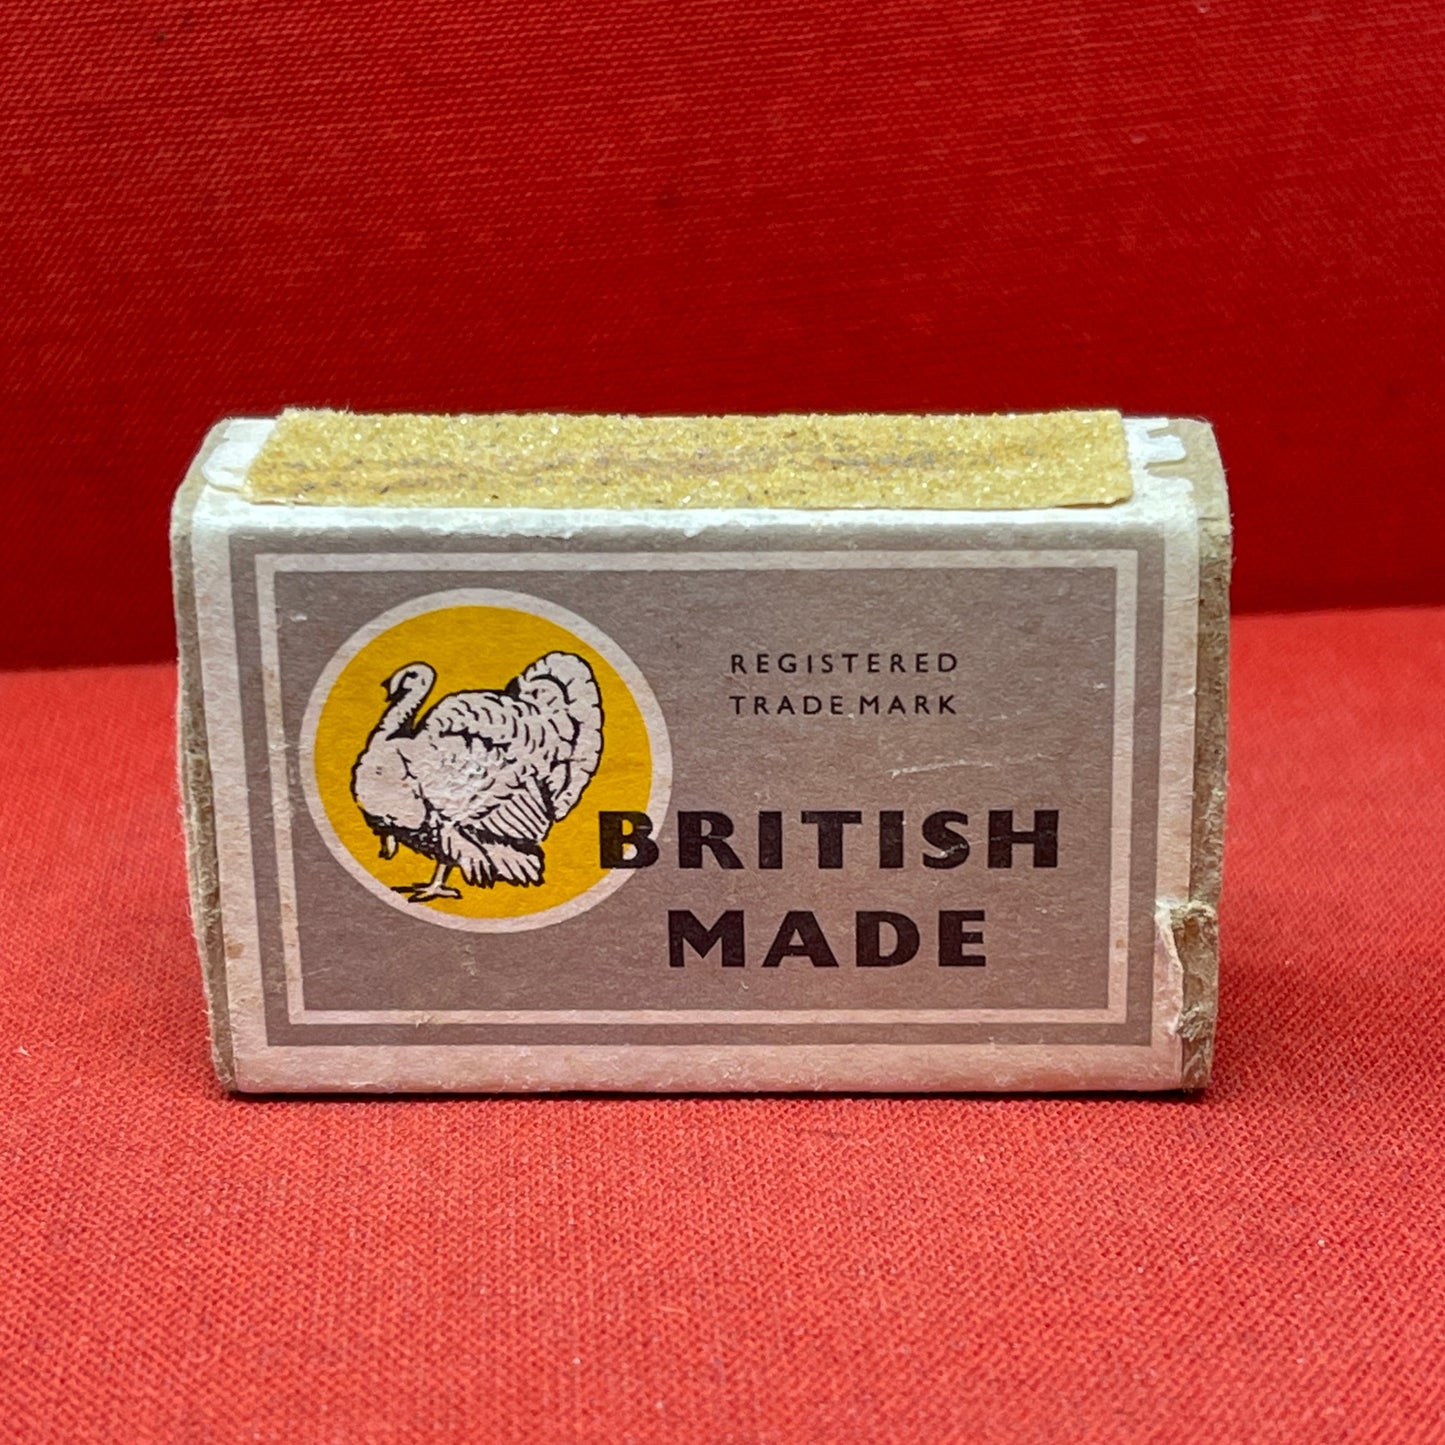 Vintage British Match Box " The Turkey Match"